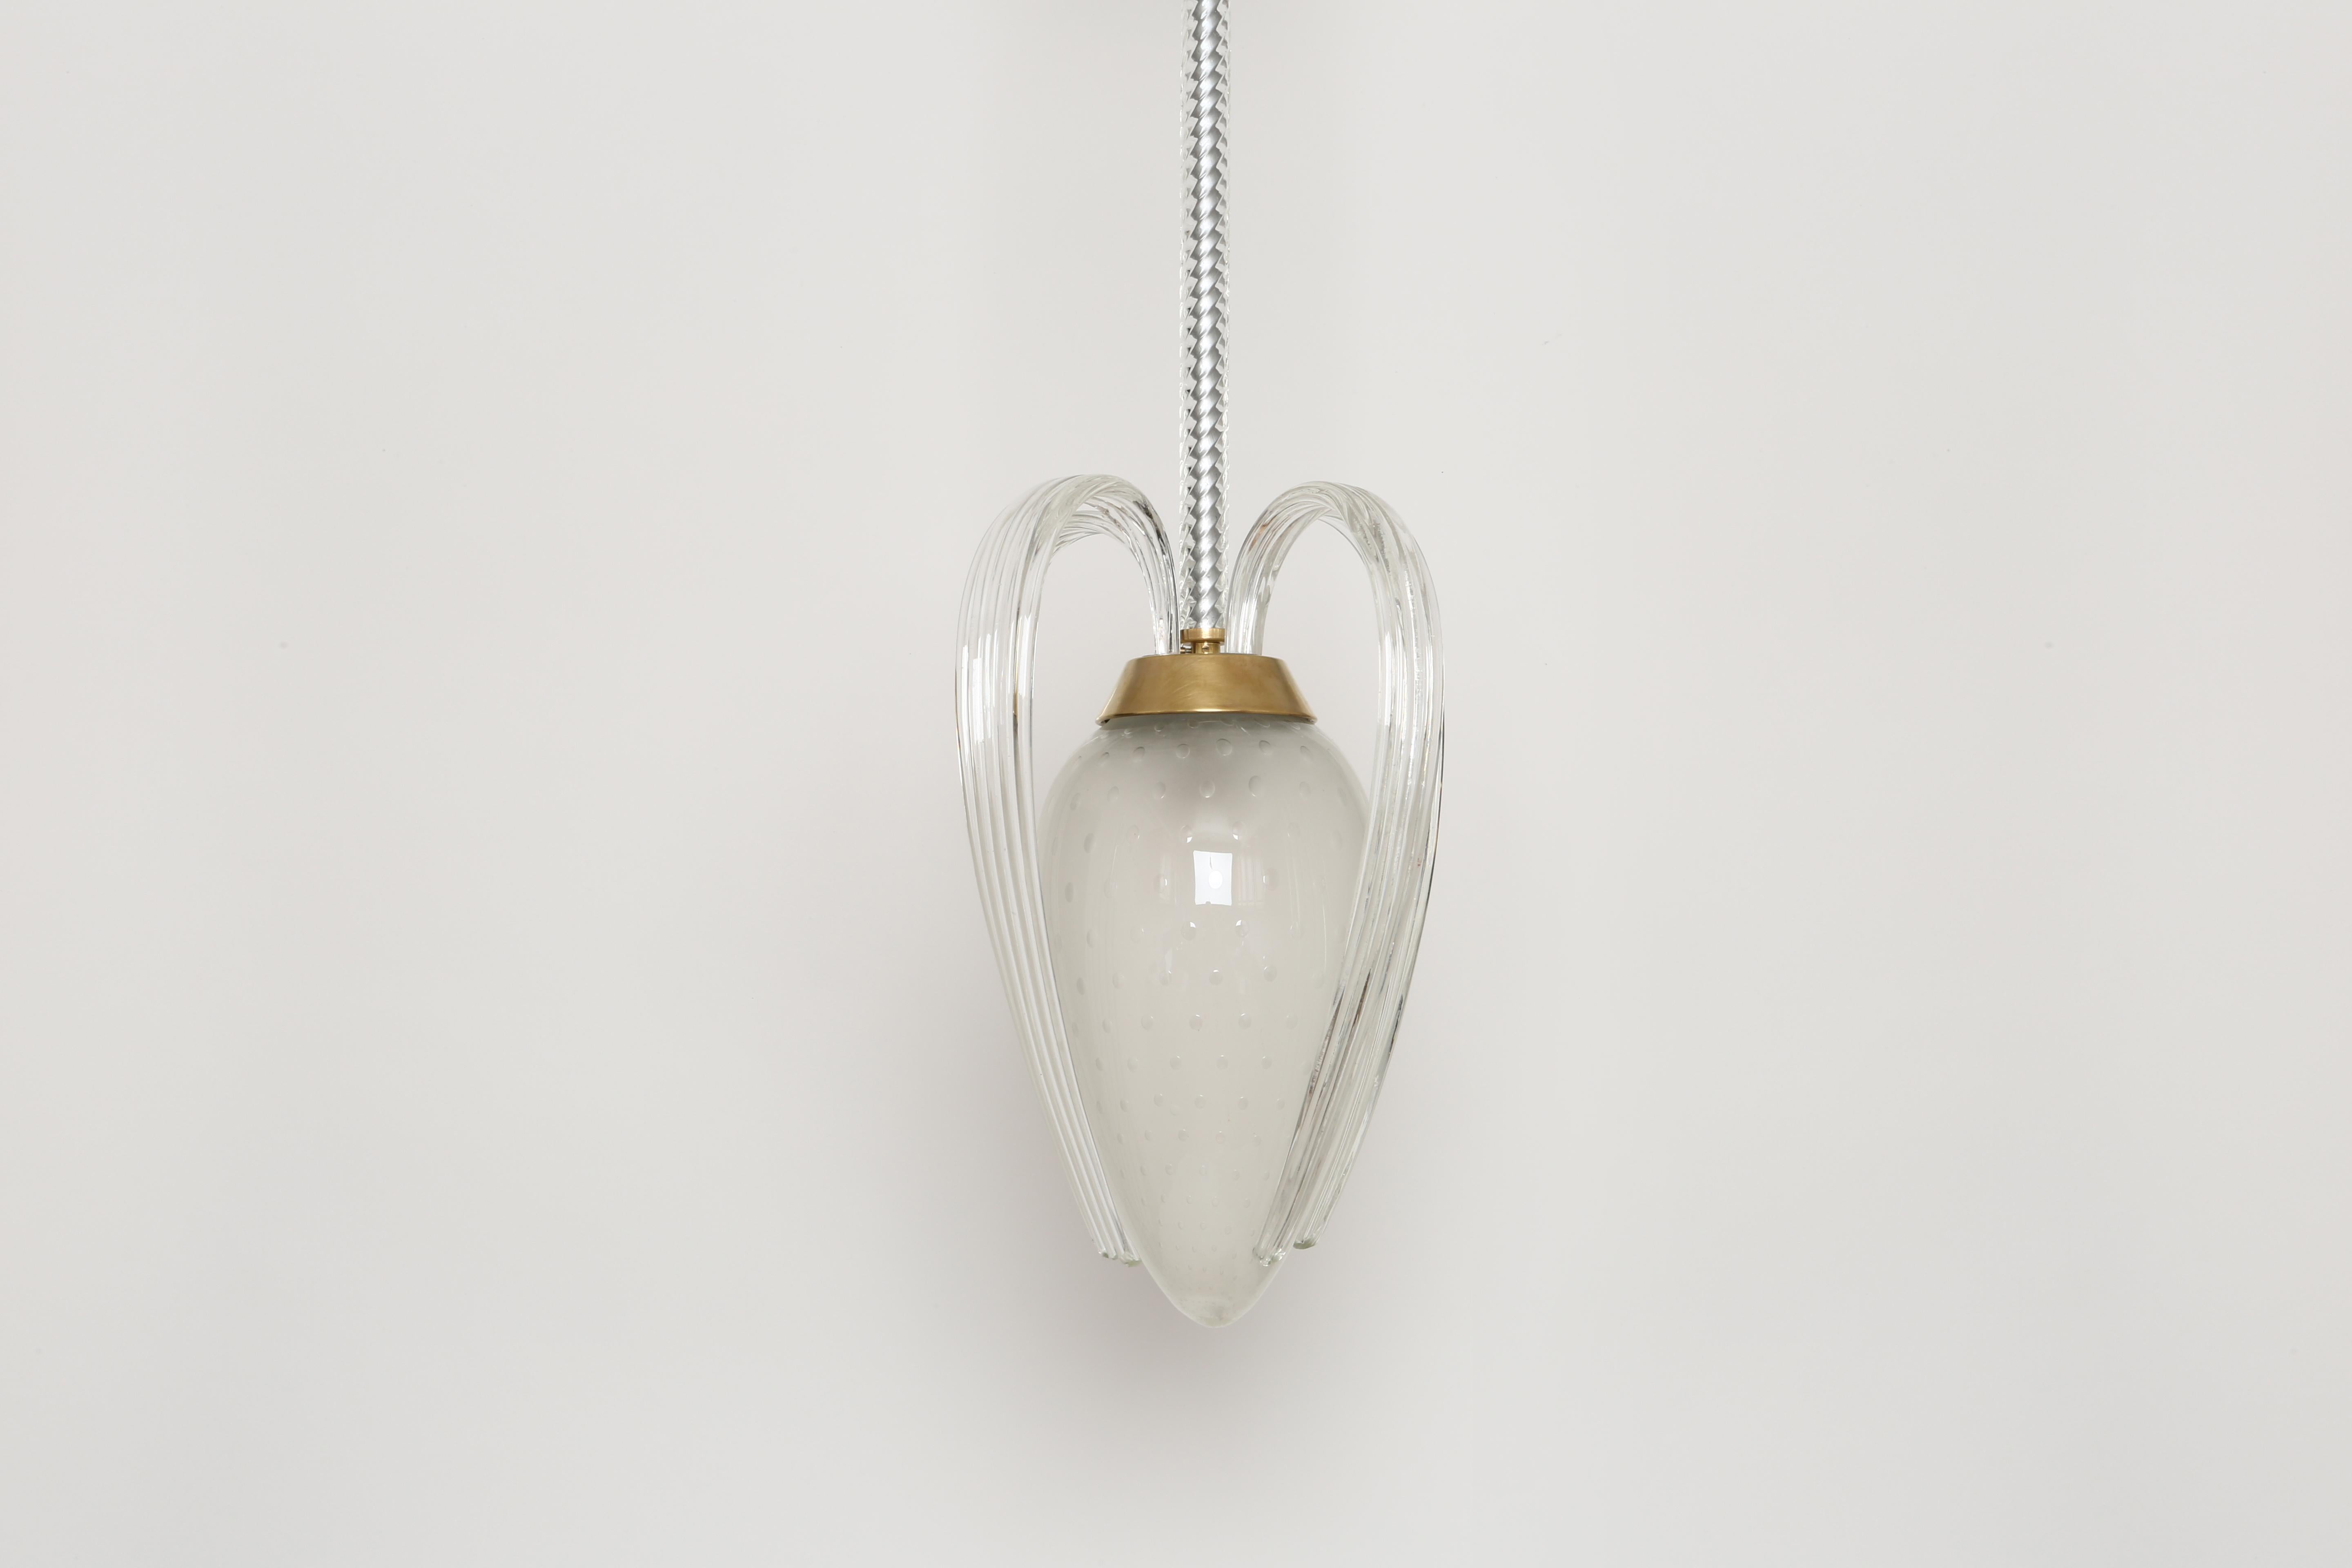 Italian Barovier Toso ceiling pendant